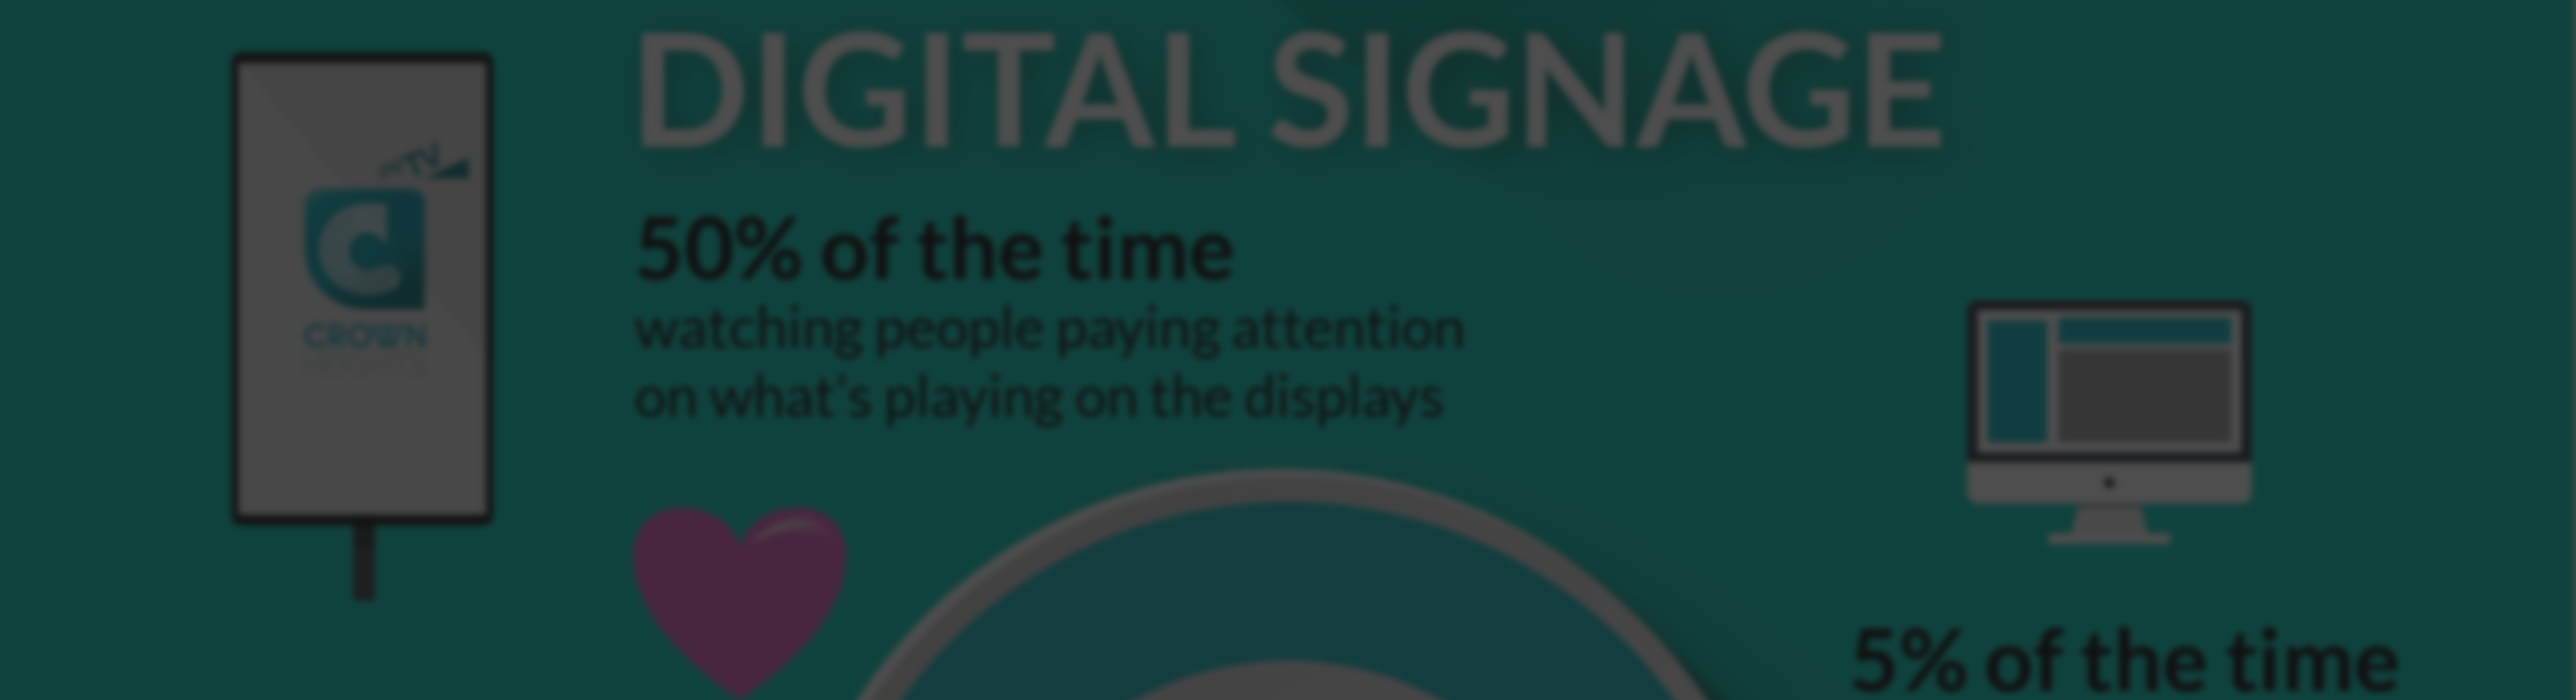 digital signage infographic, infographic